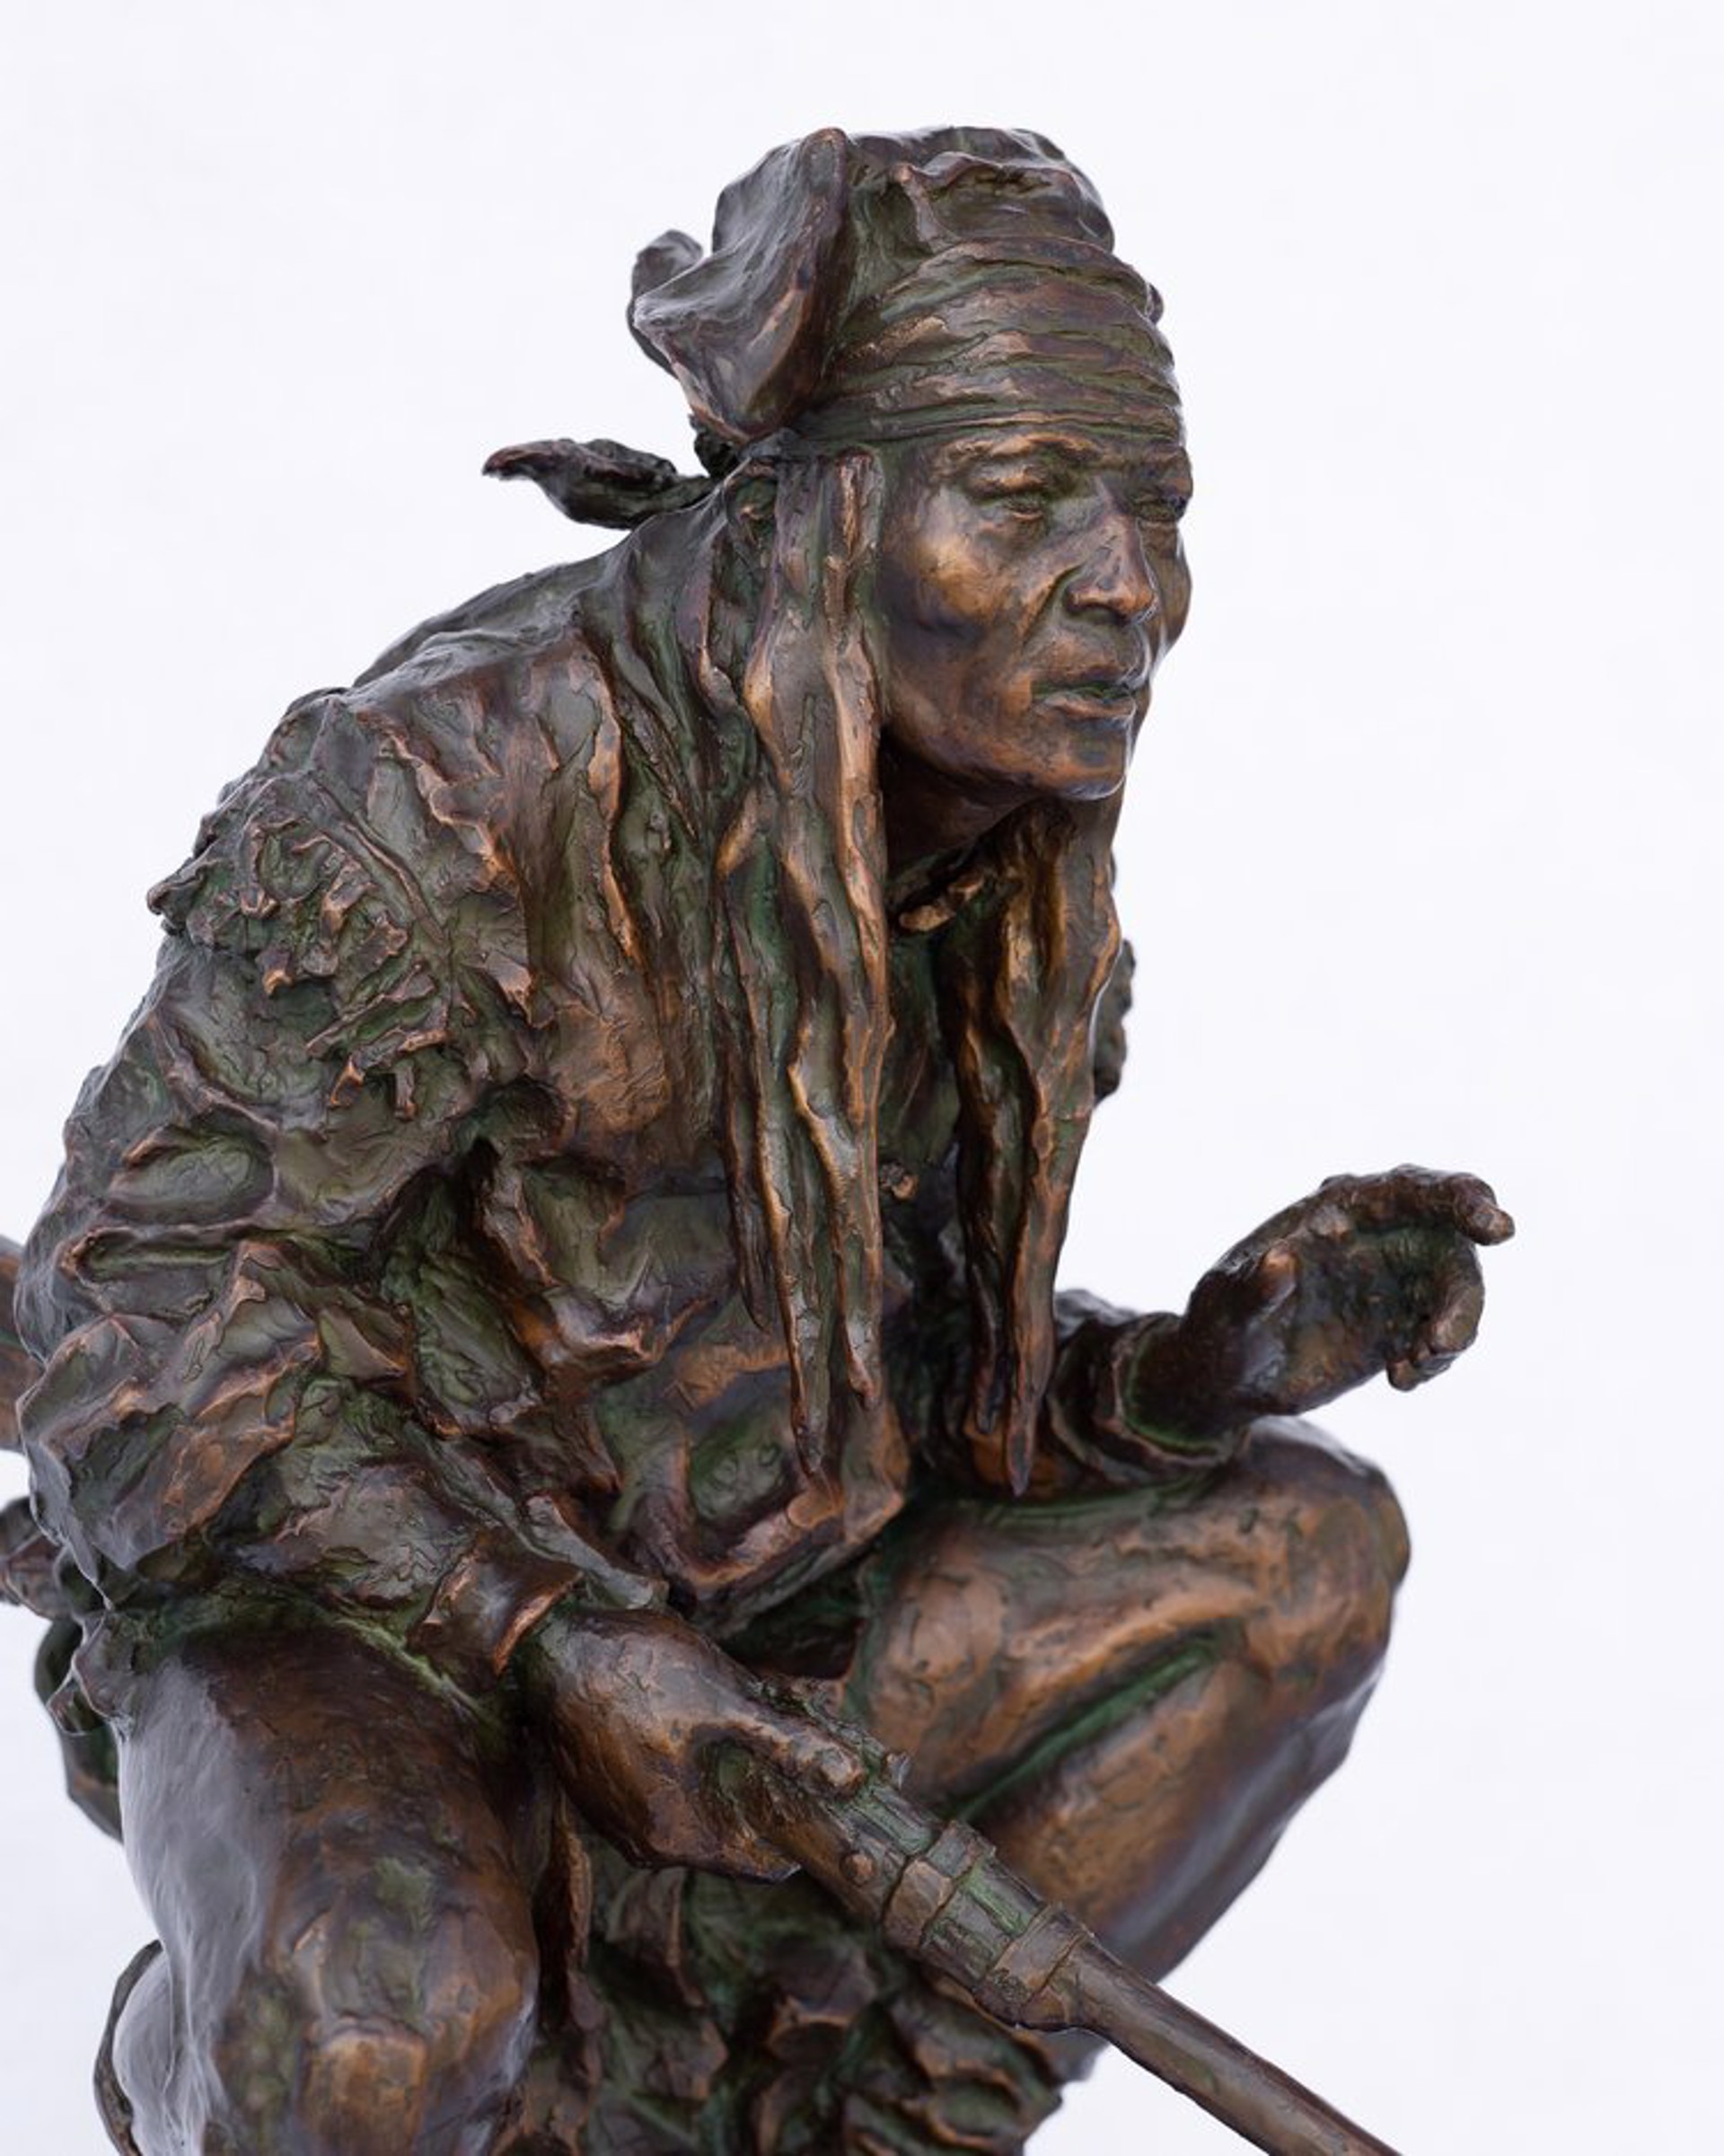 Chiricahua Apache Monument by Scott Rogers